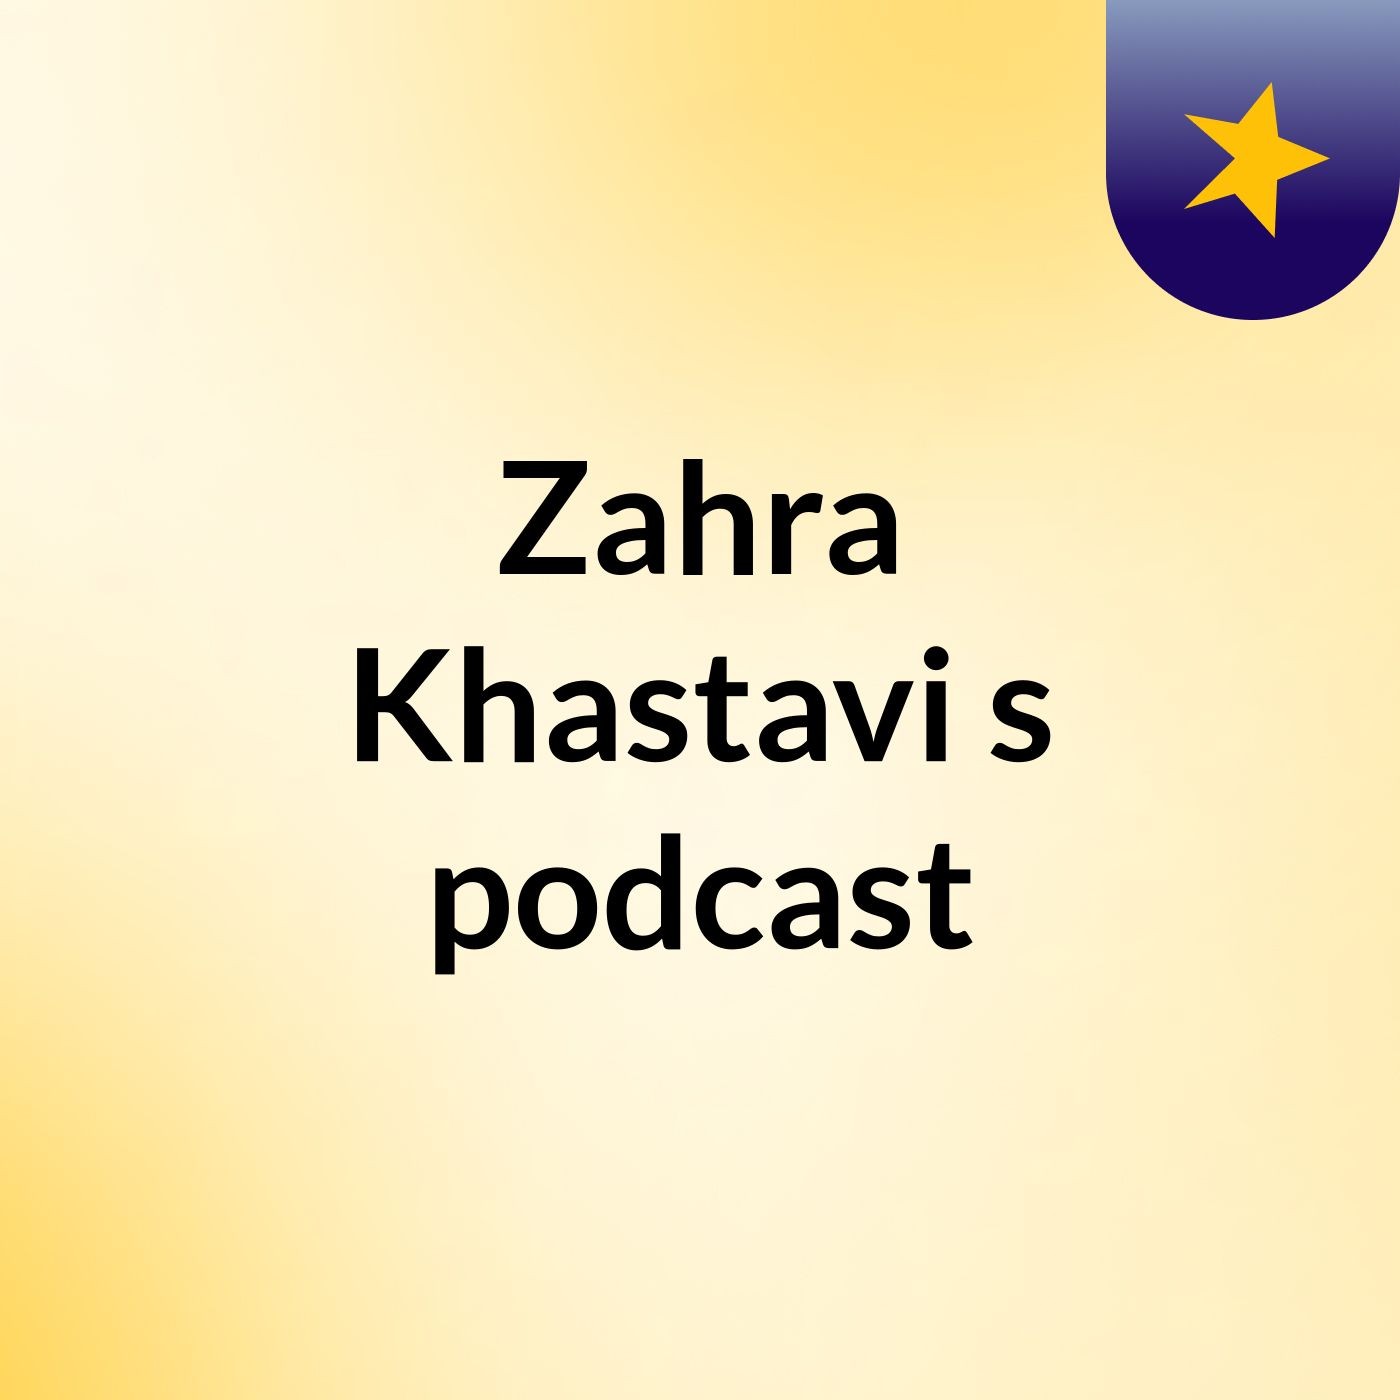 Zahra Khastavi's podcast